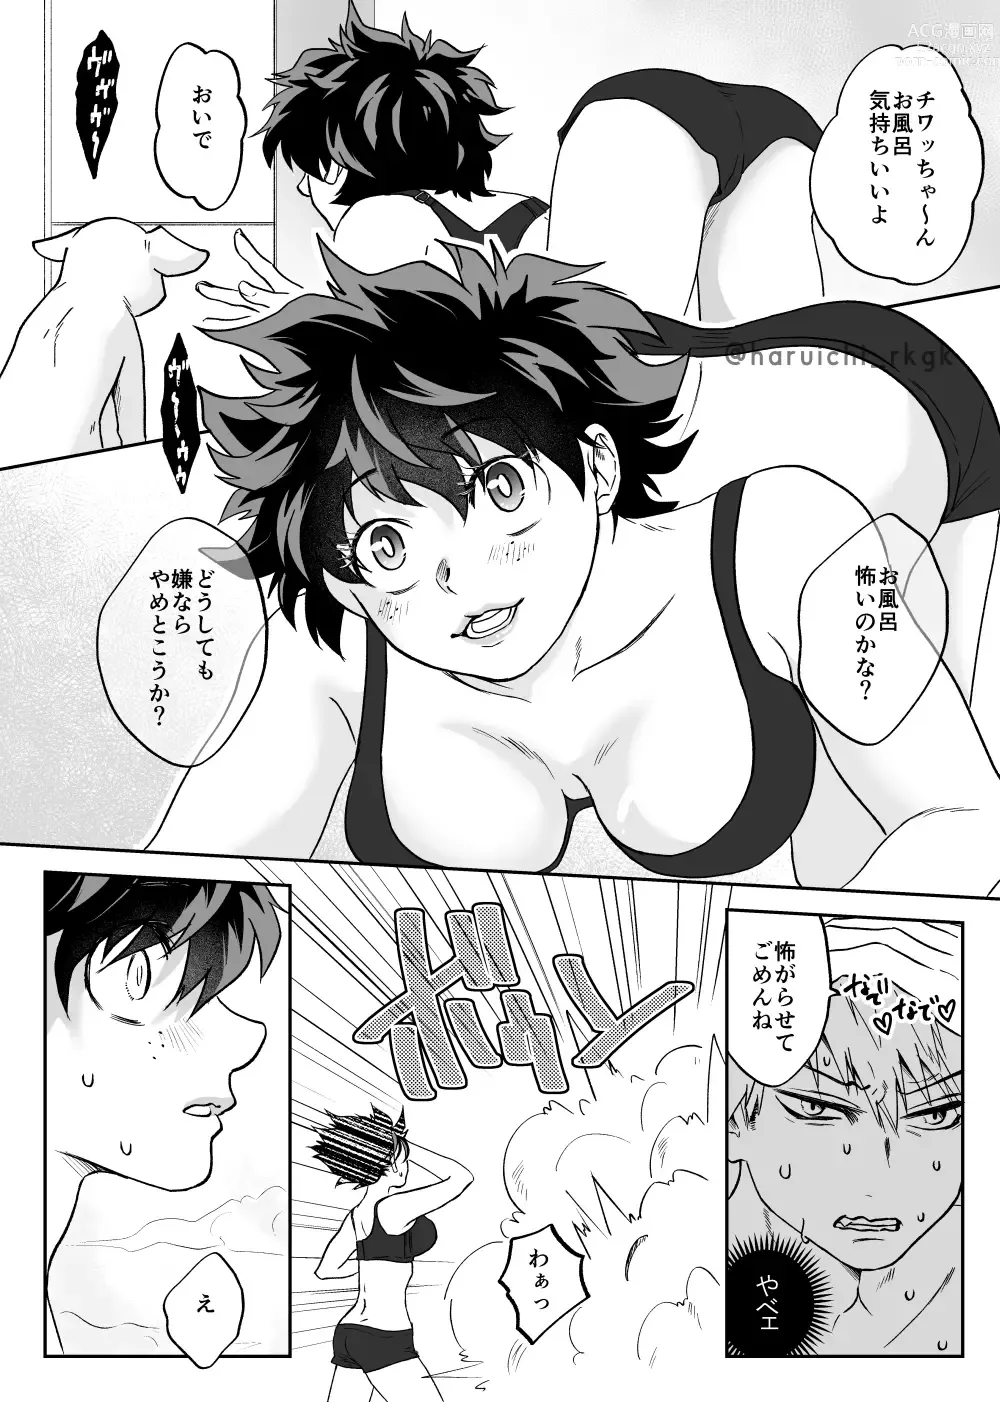 Page 22 of doujinshi KatsuDe R18 Matome